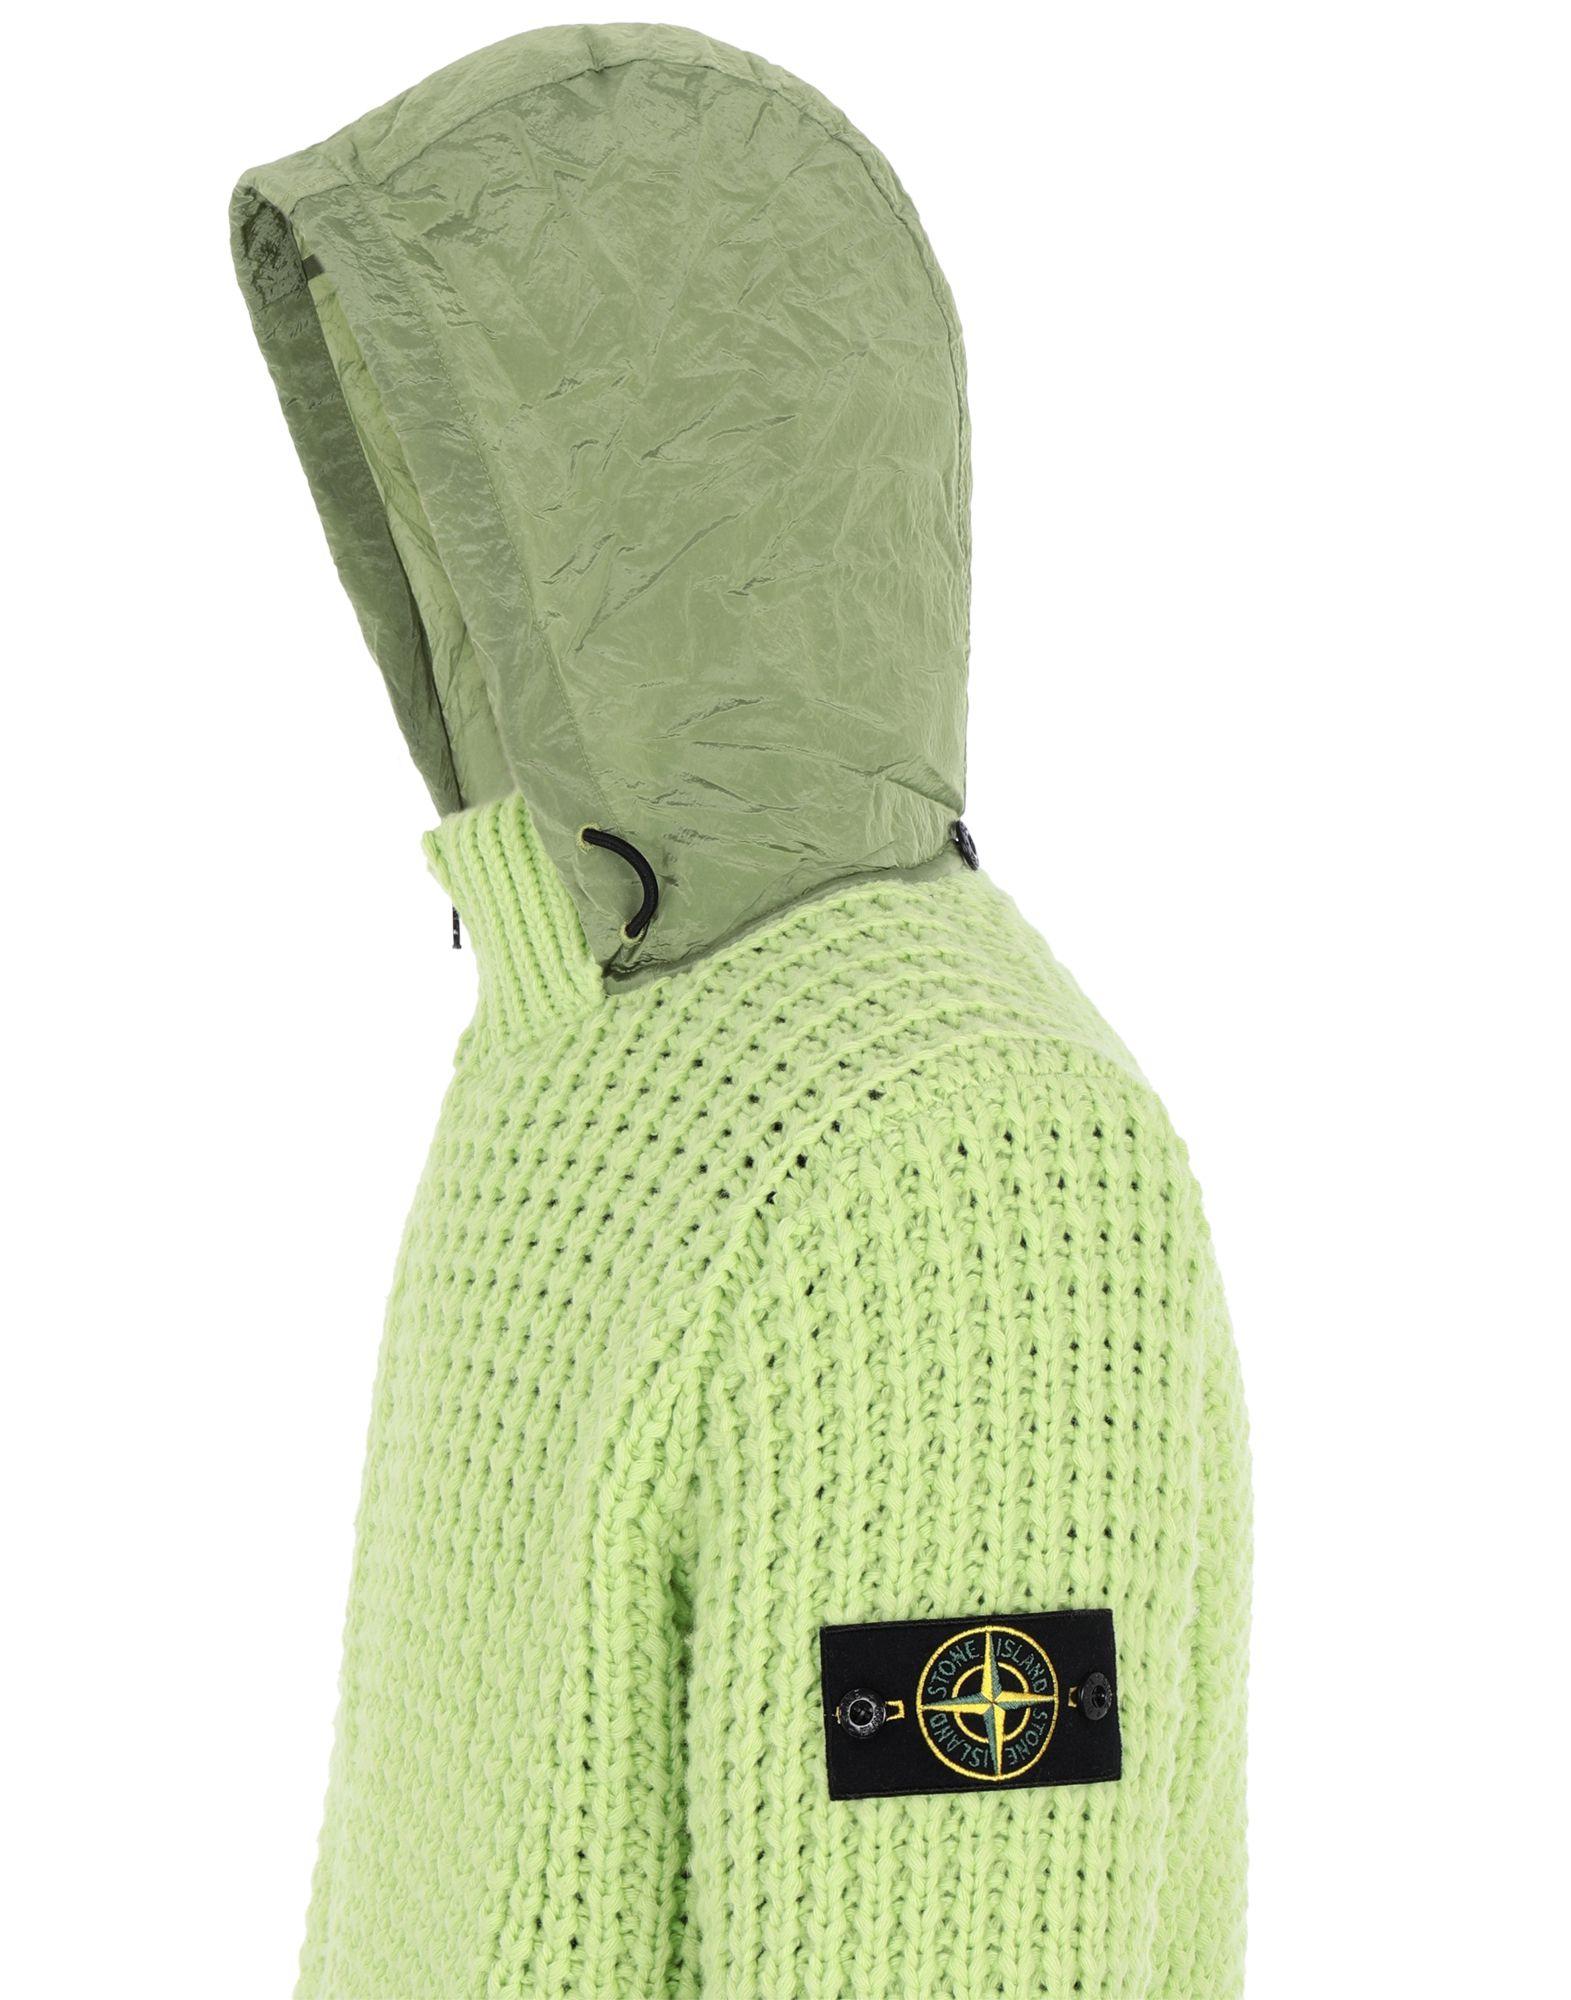 Stone Island Wool 569c8 President's Knit in Pistachio Green (Green) for Men  - Lyst